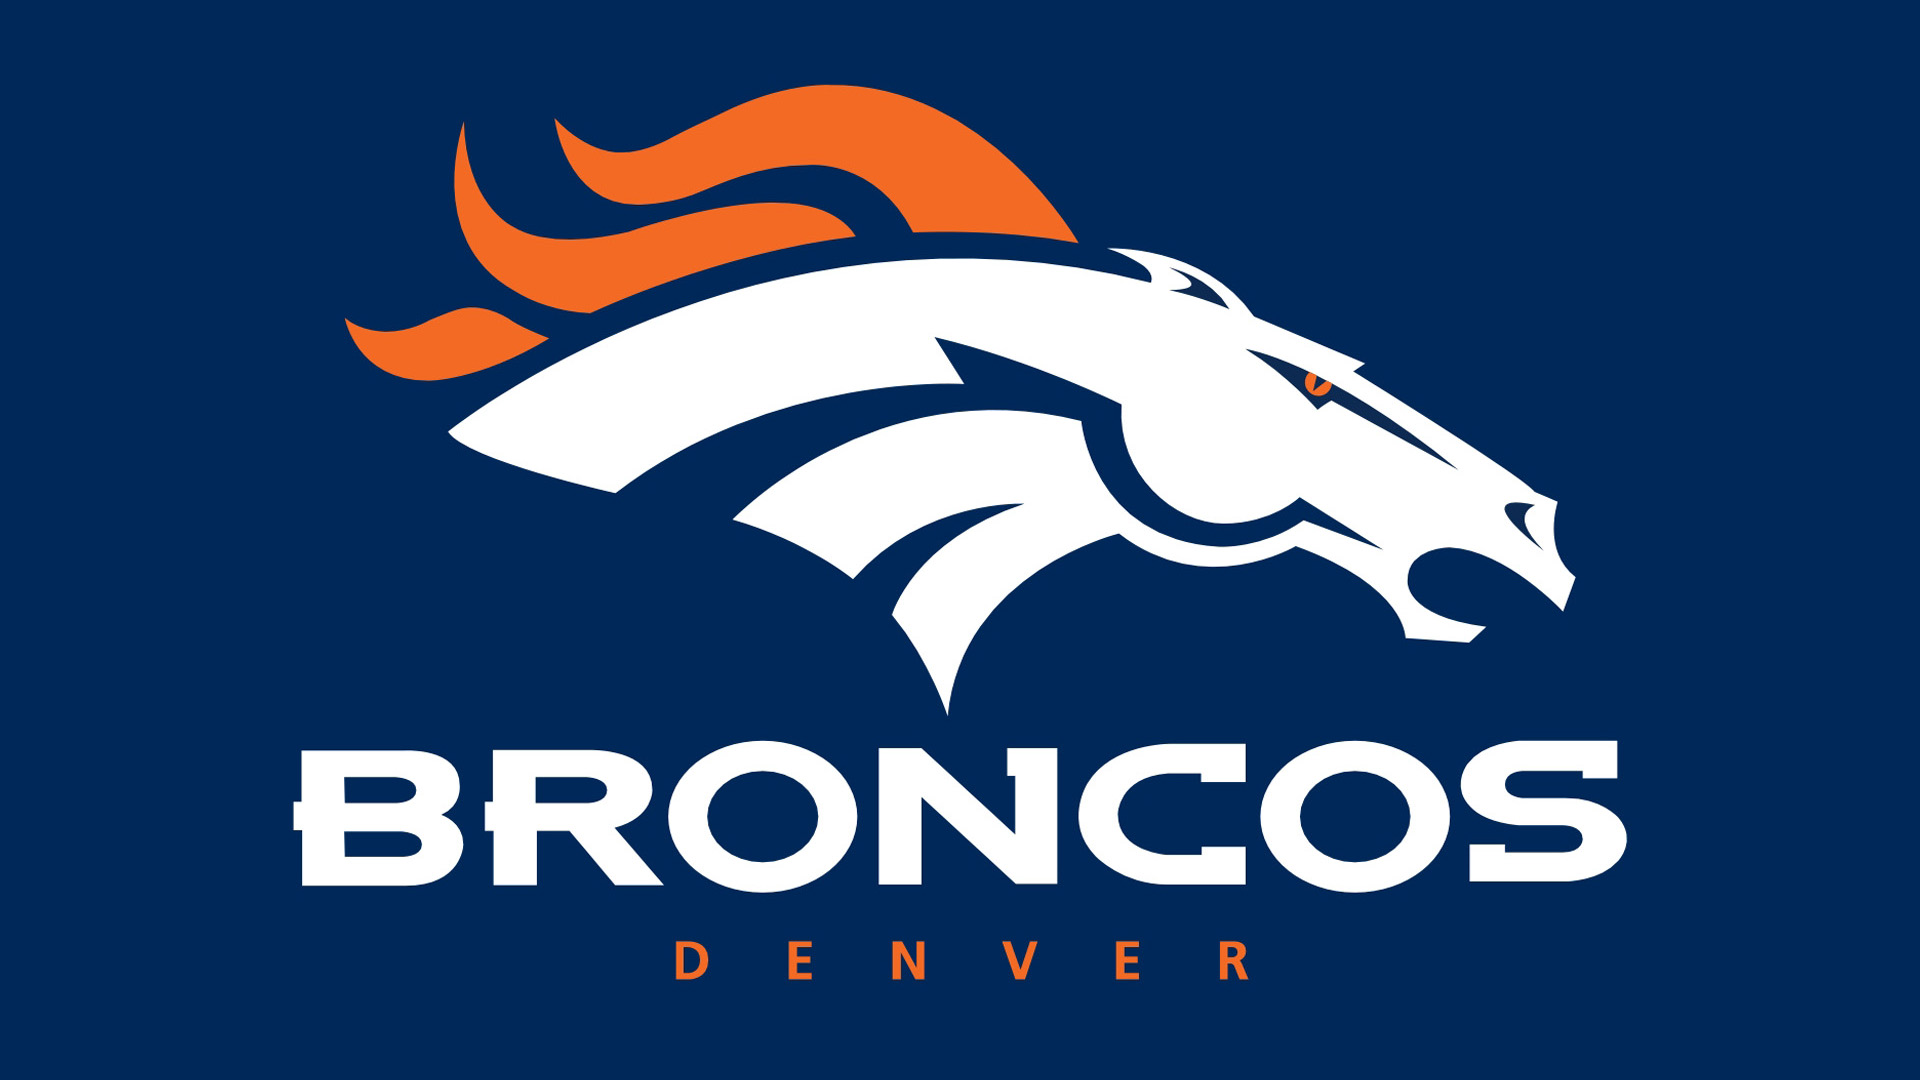 Denver Broncos Horse Logo HD Image Sports Nfl Football